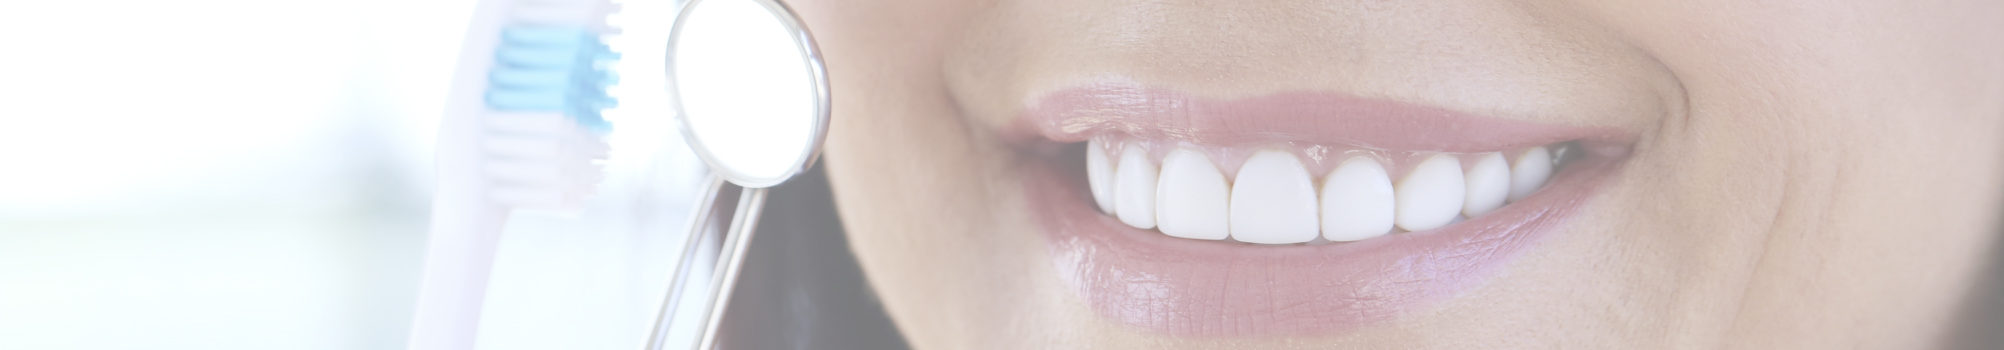 Gum Disease Treatment in Croydon